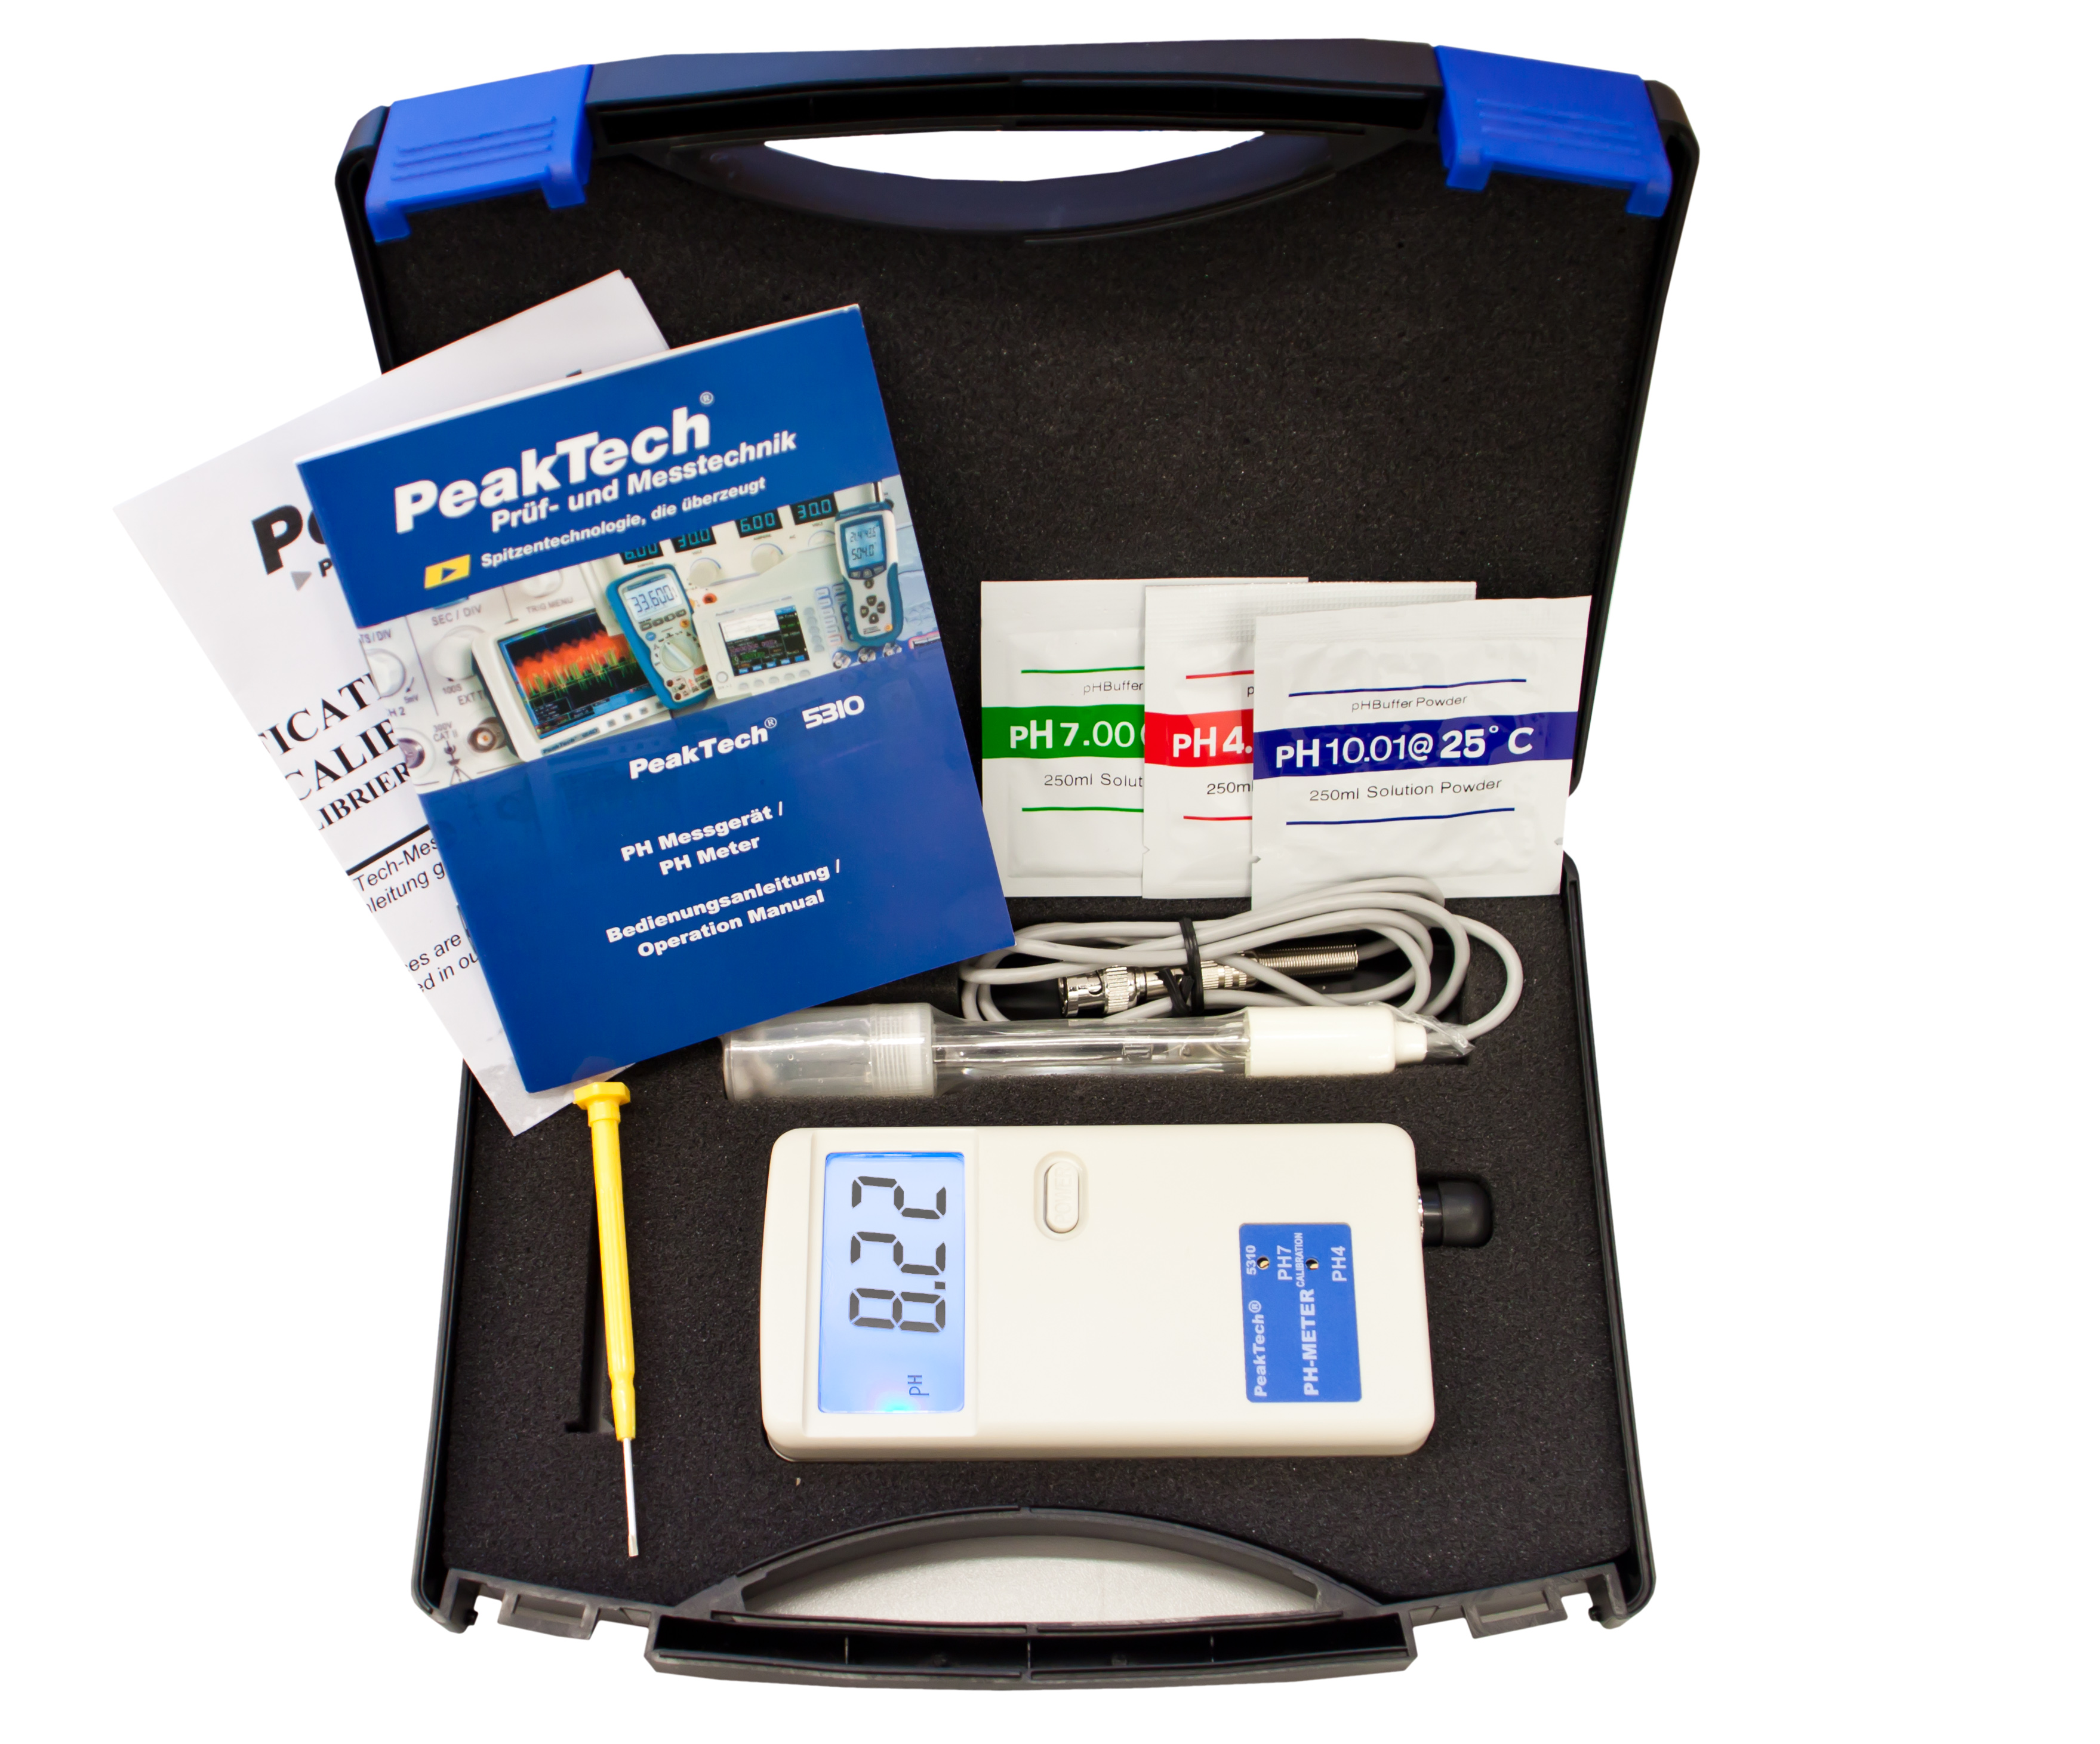 «PeakTech® P 5310» PH Meter / Water Quality Tester